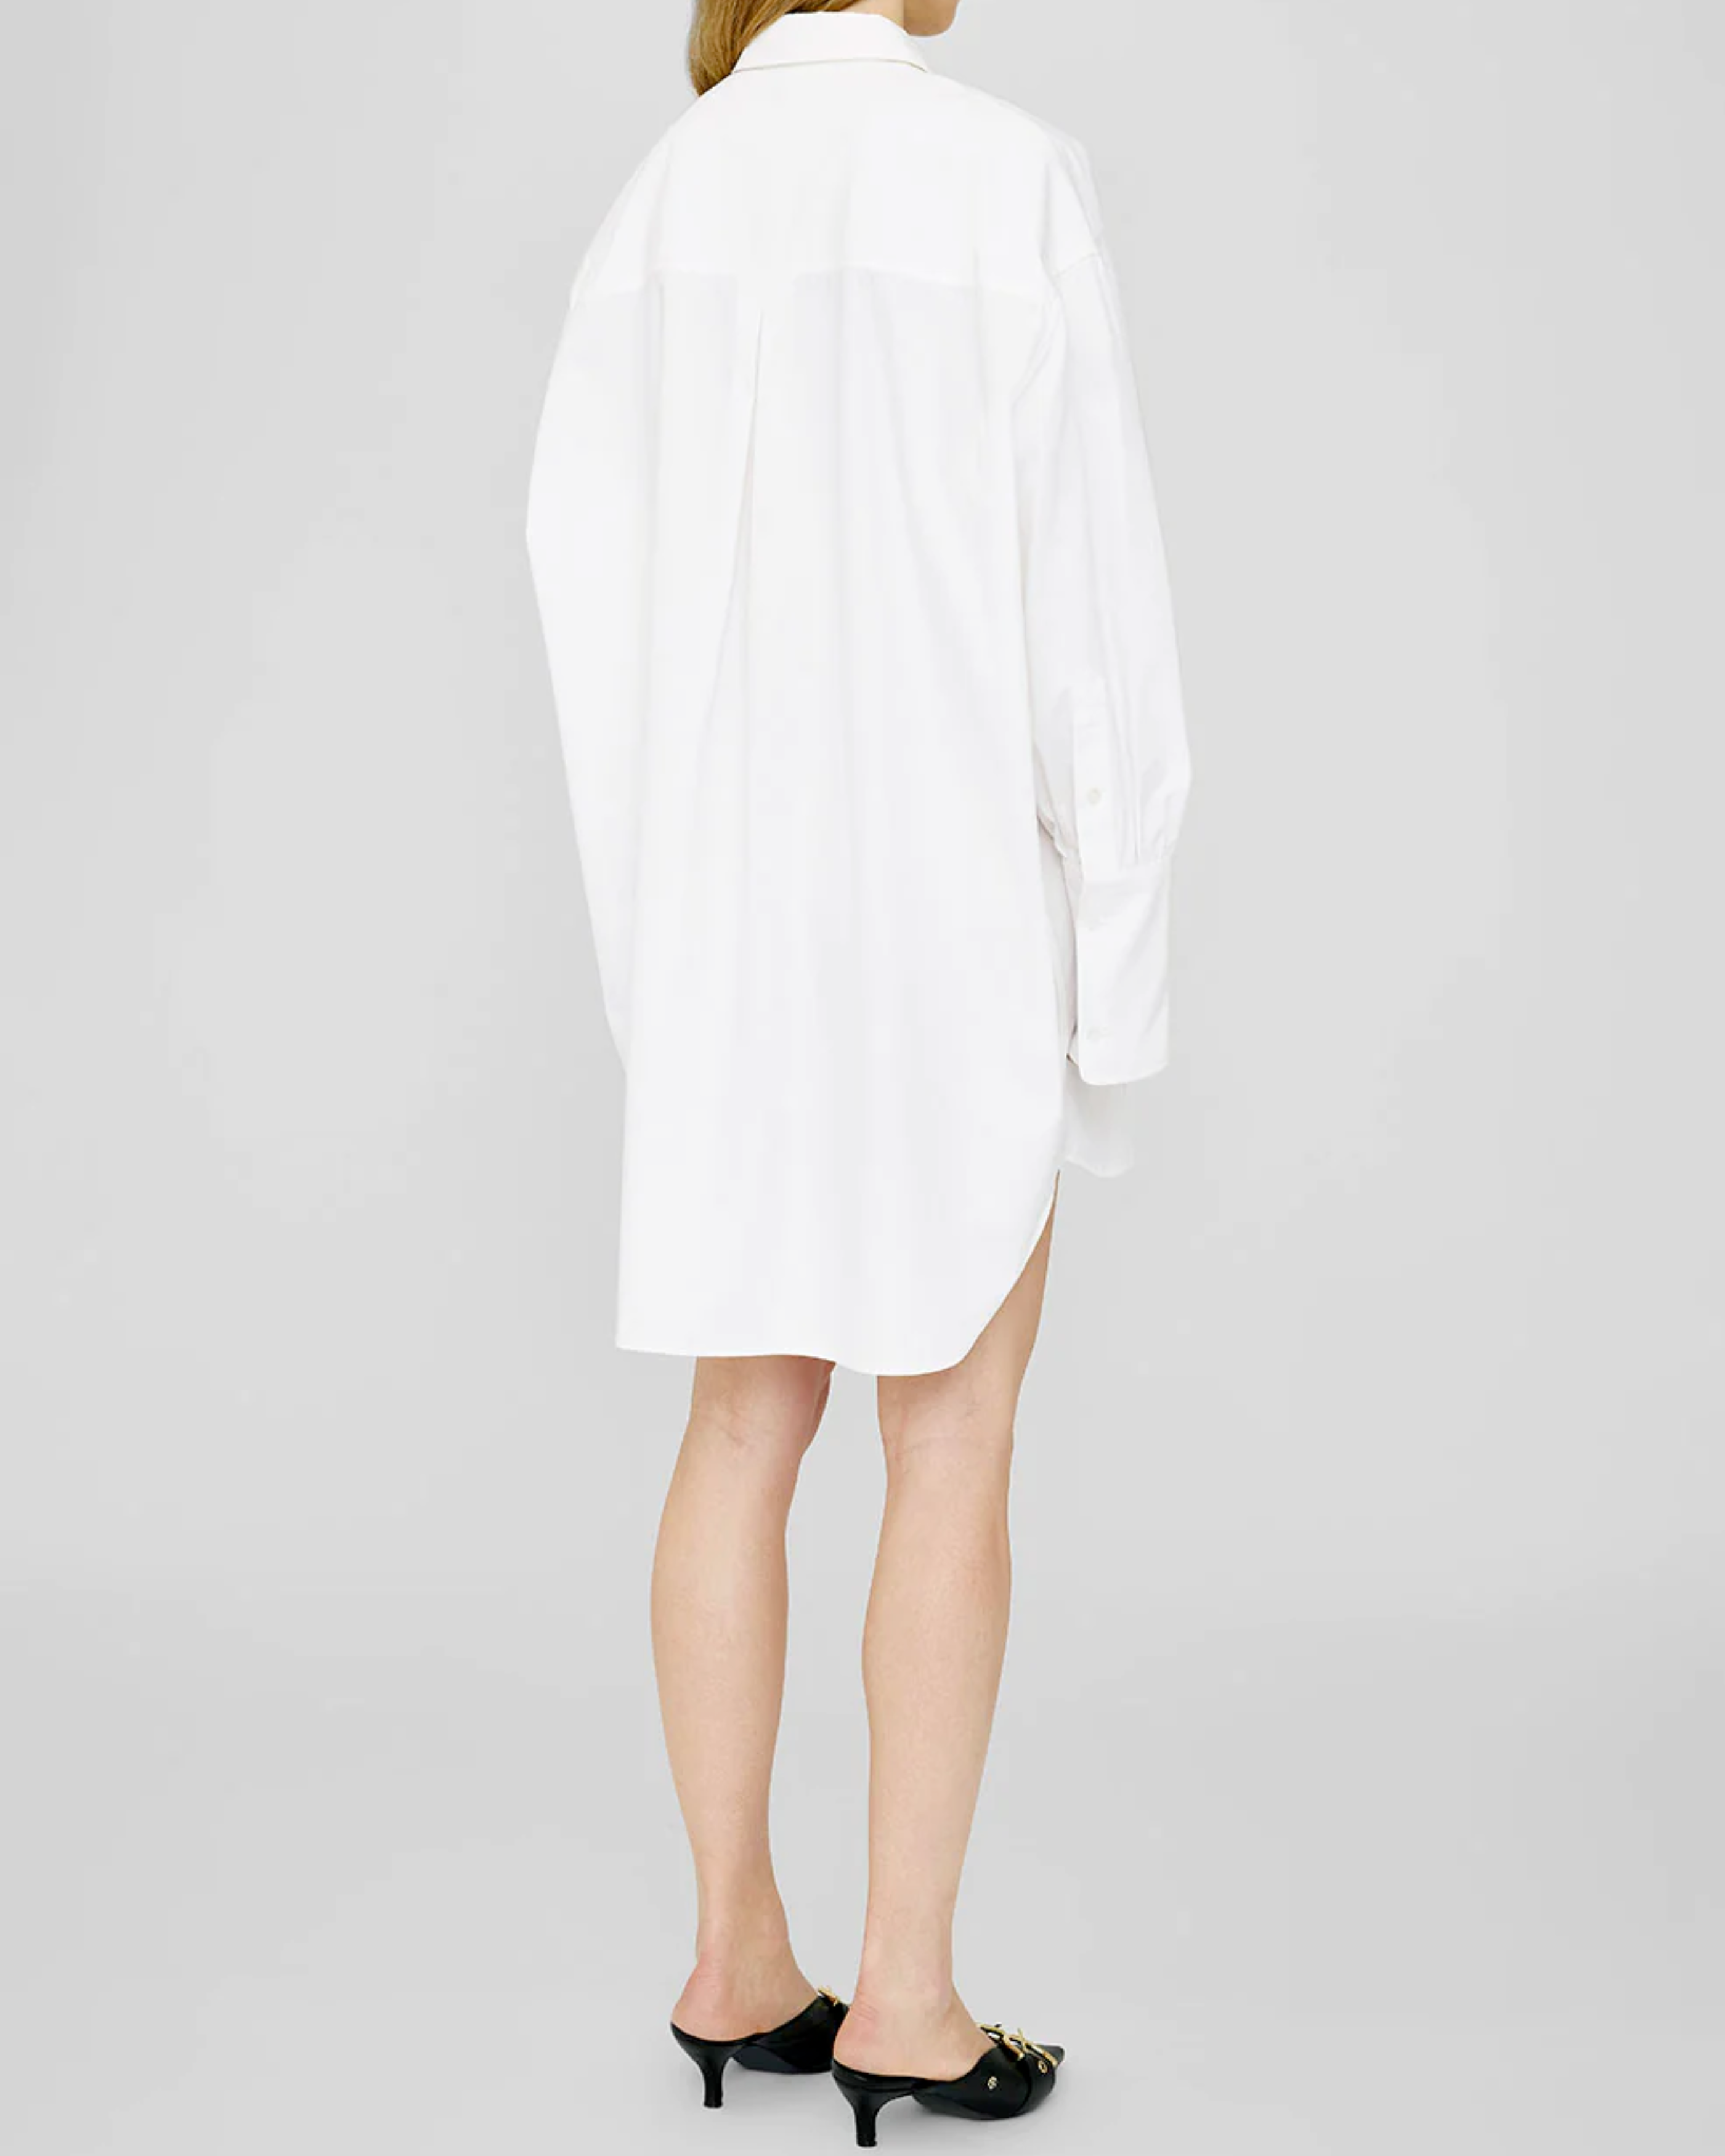 Anine Bing Maxine Dress in White